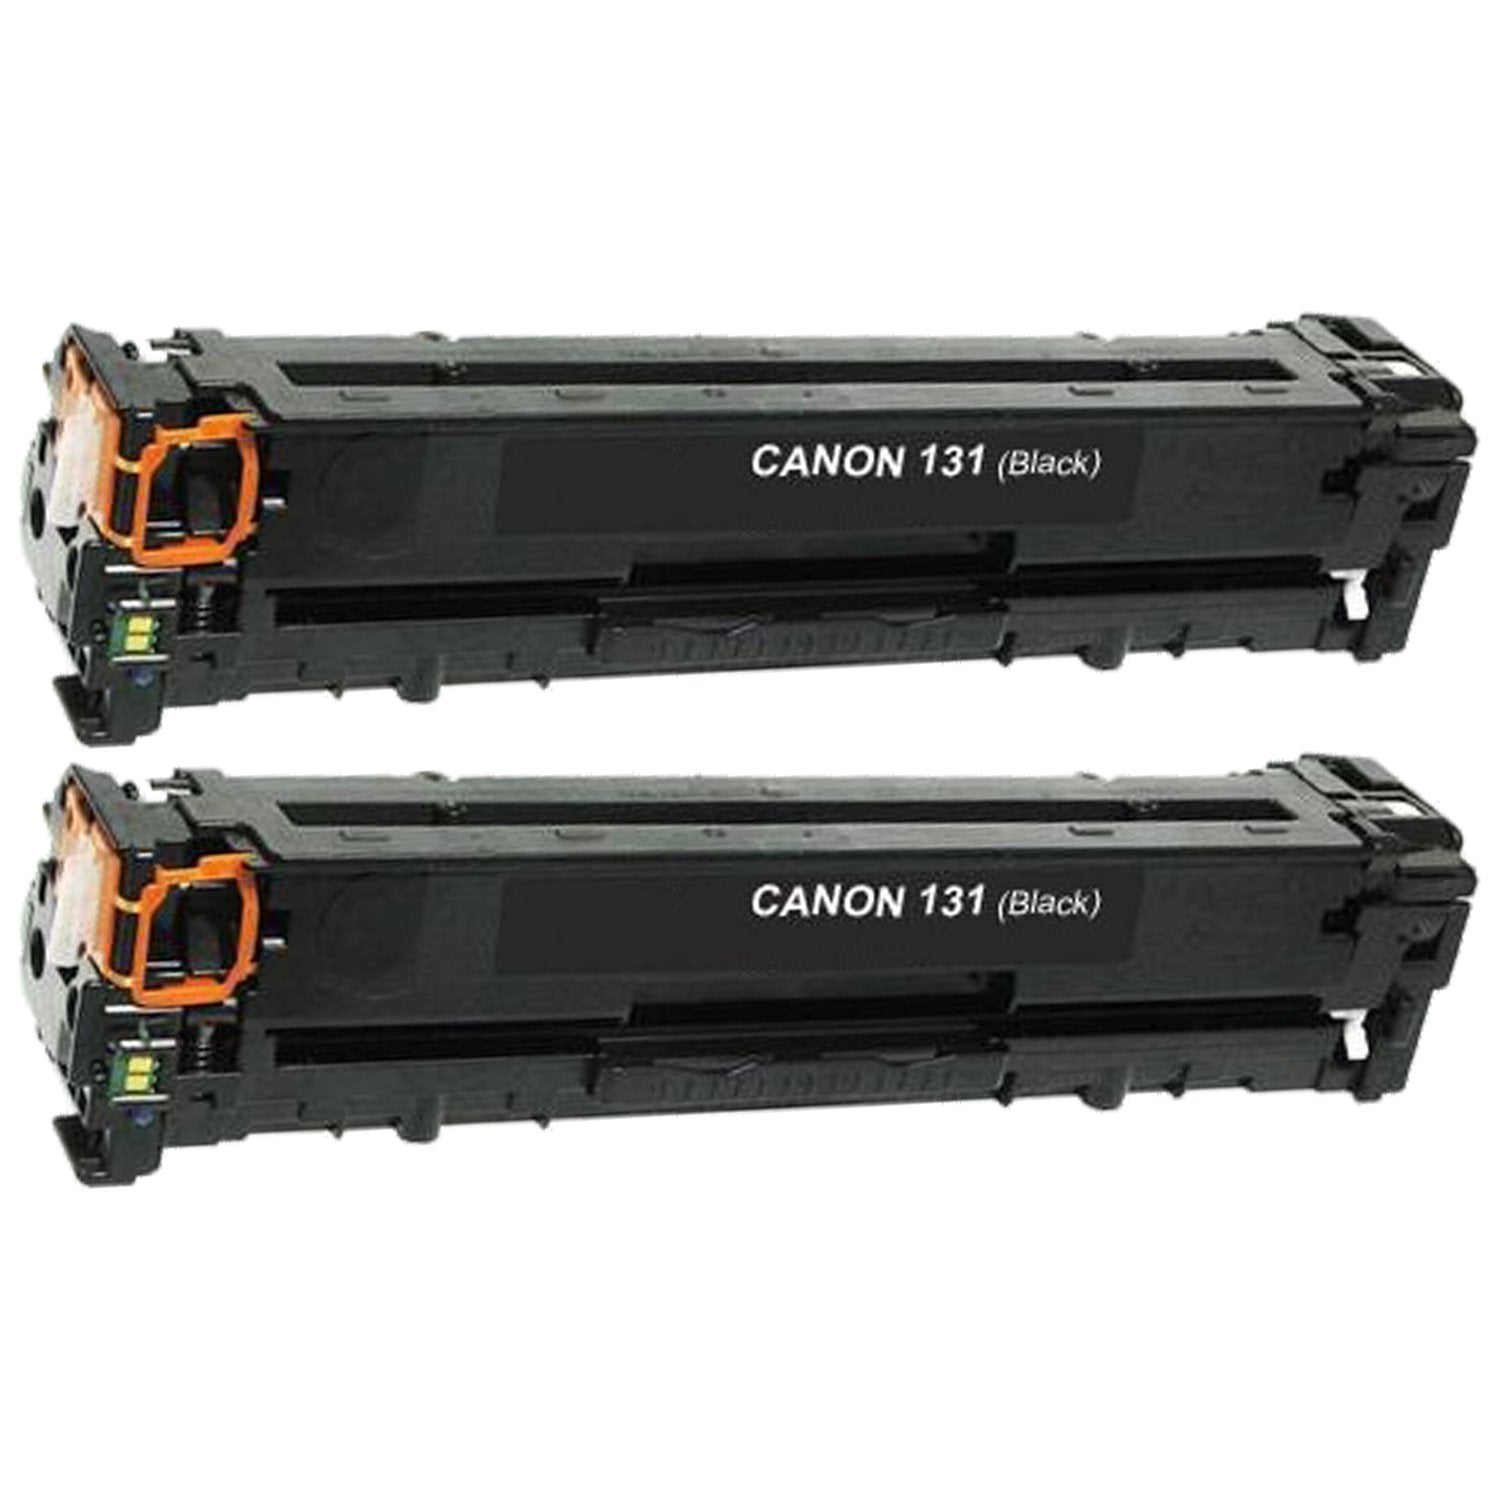 Absolute Toner Compatible Canon 131 Black Toner Cartridge | Absolute Toner Canon Toner Cartridges